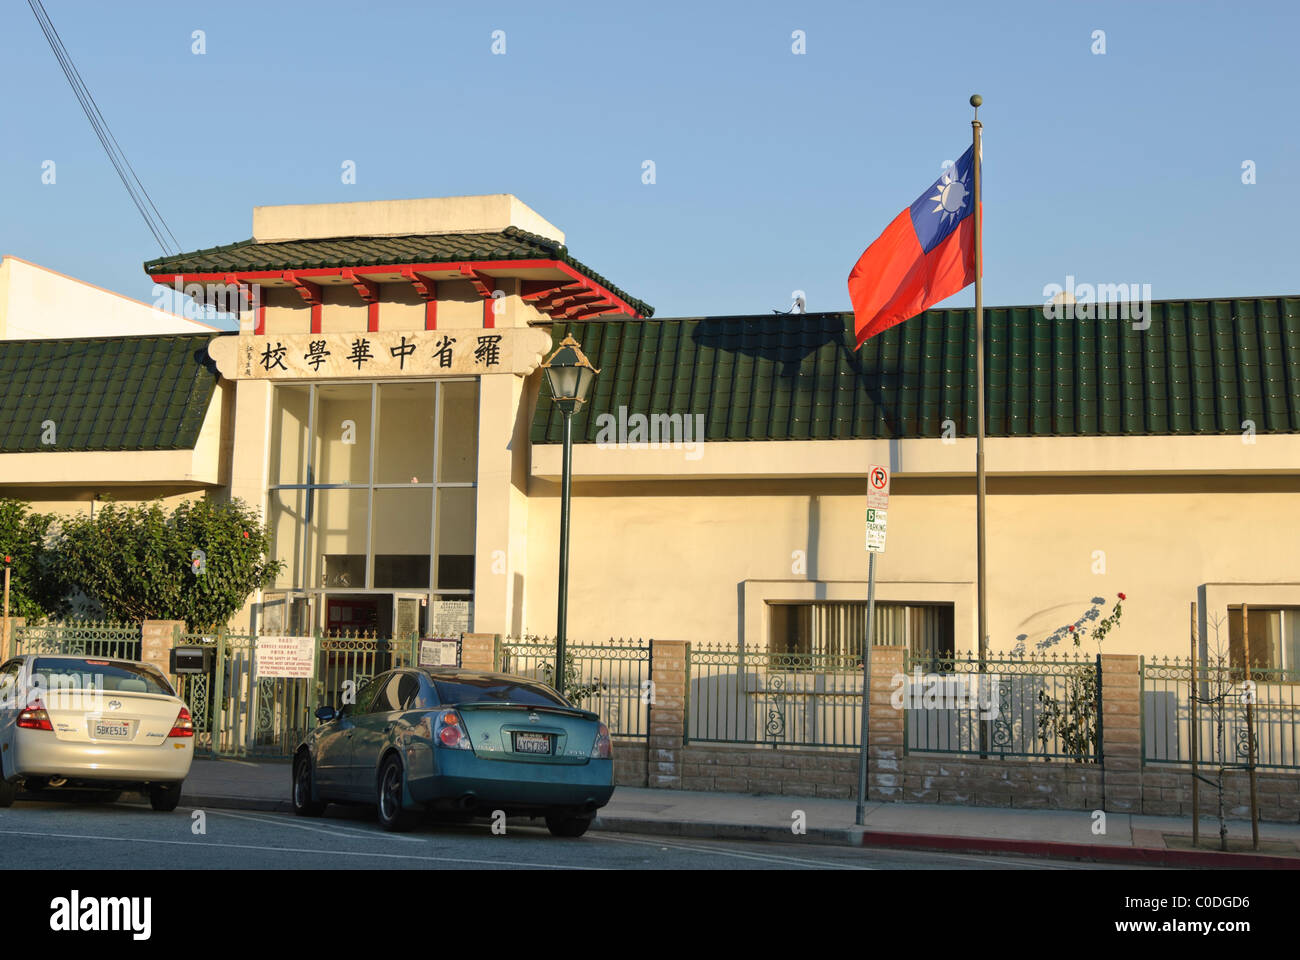 Chinesische Schule in Los Angeles Chinatown gelegen. Stockfoto